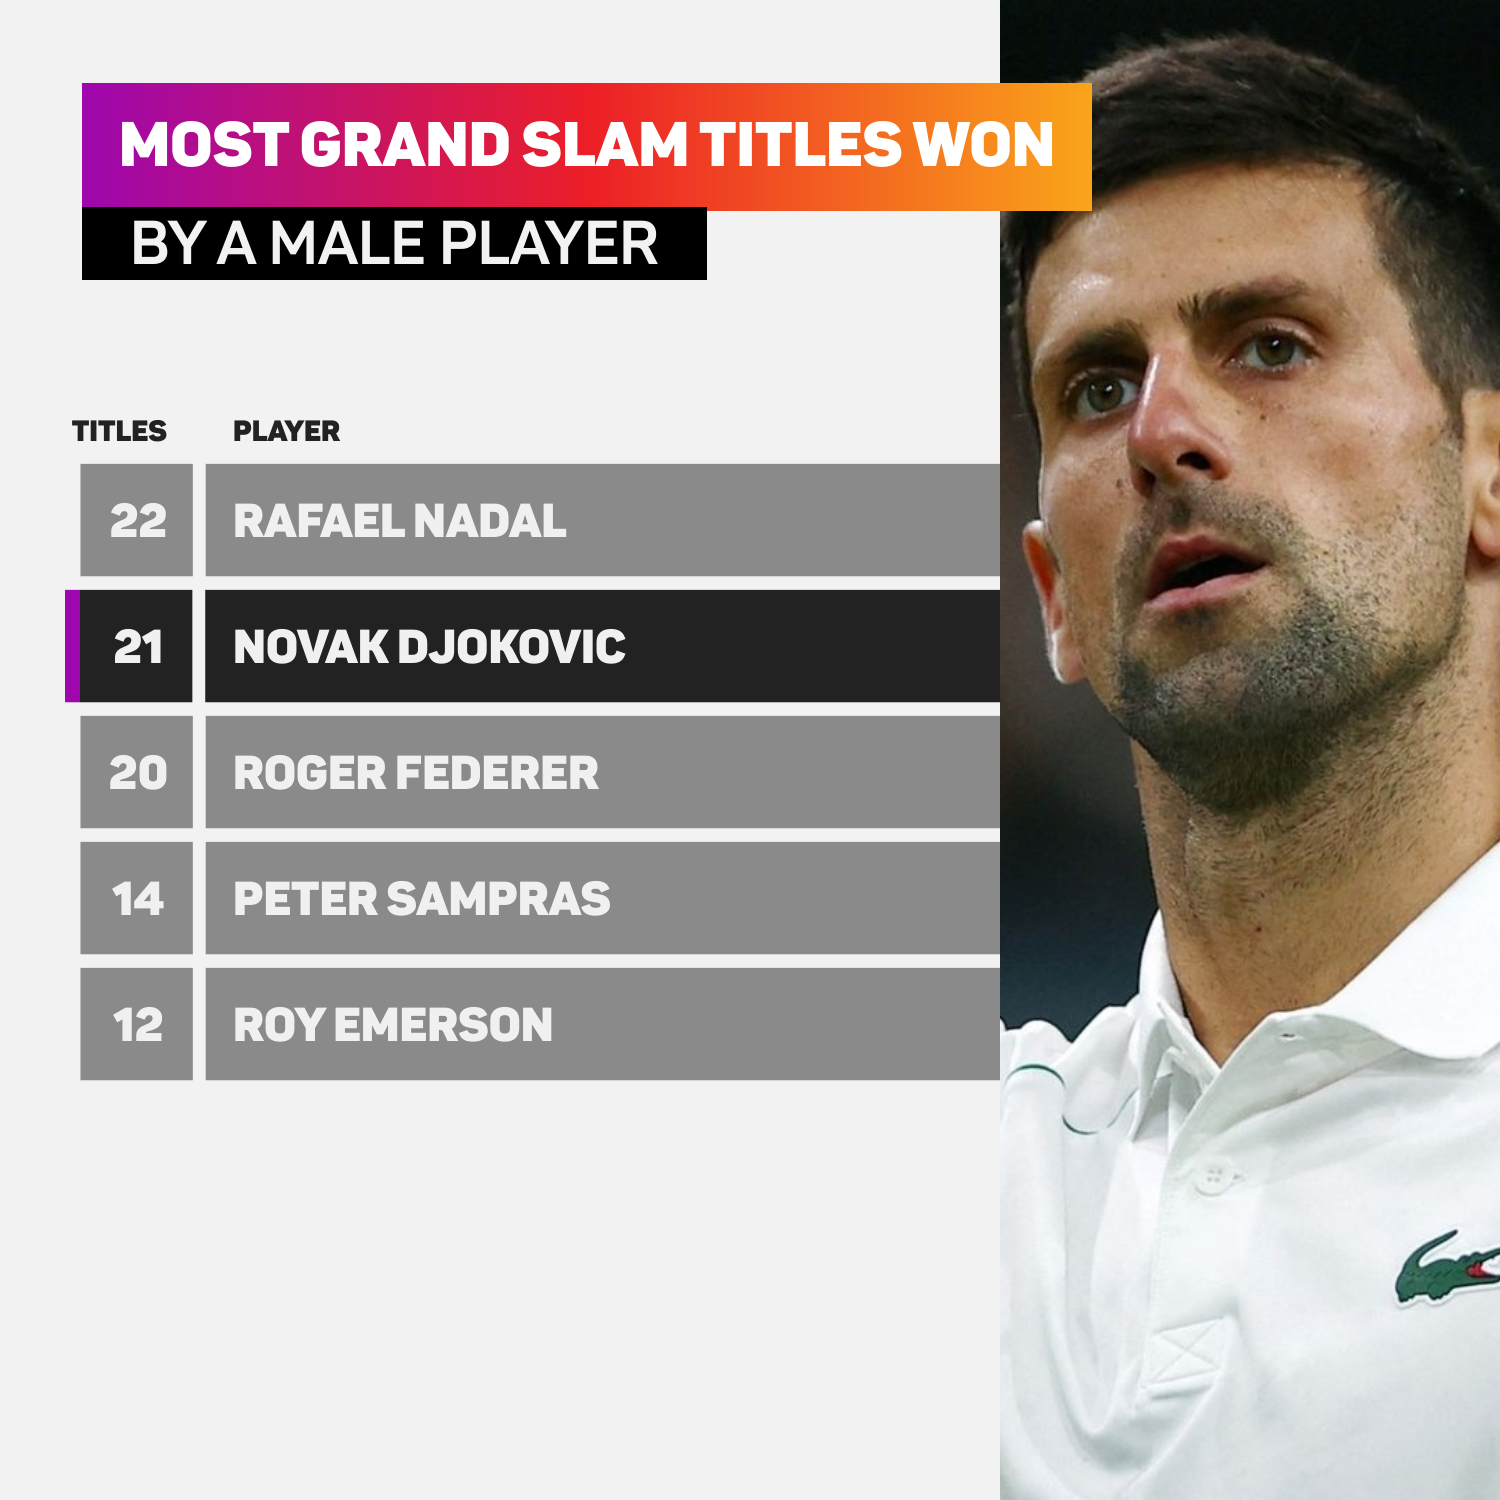 Novak Djokovic has now won 21 grand slam titles